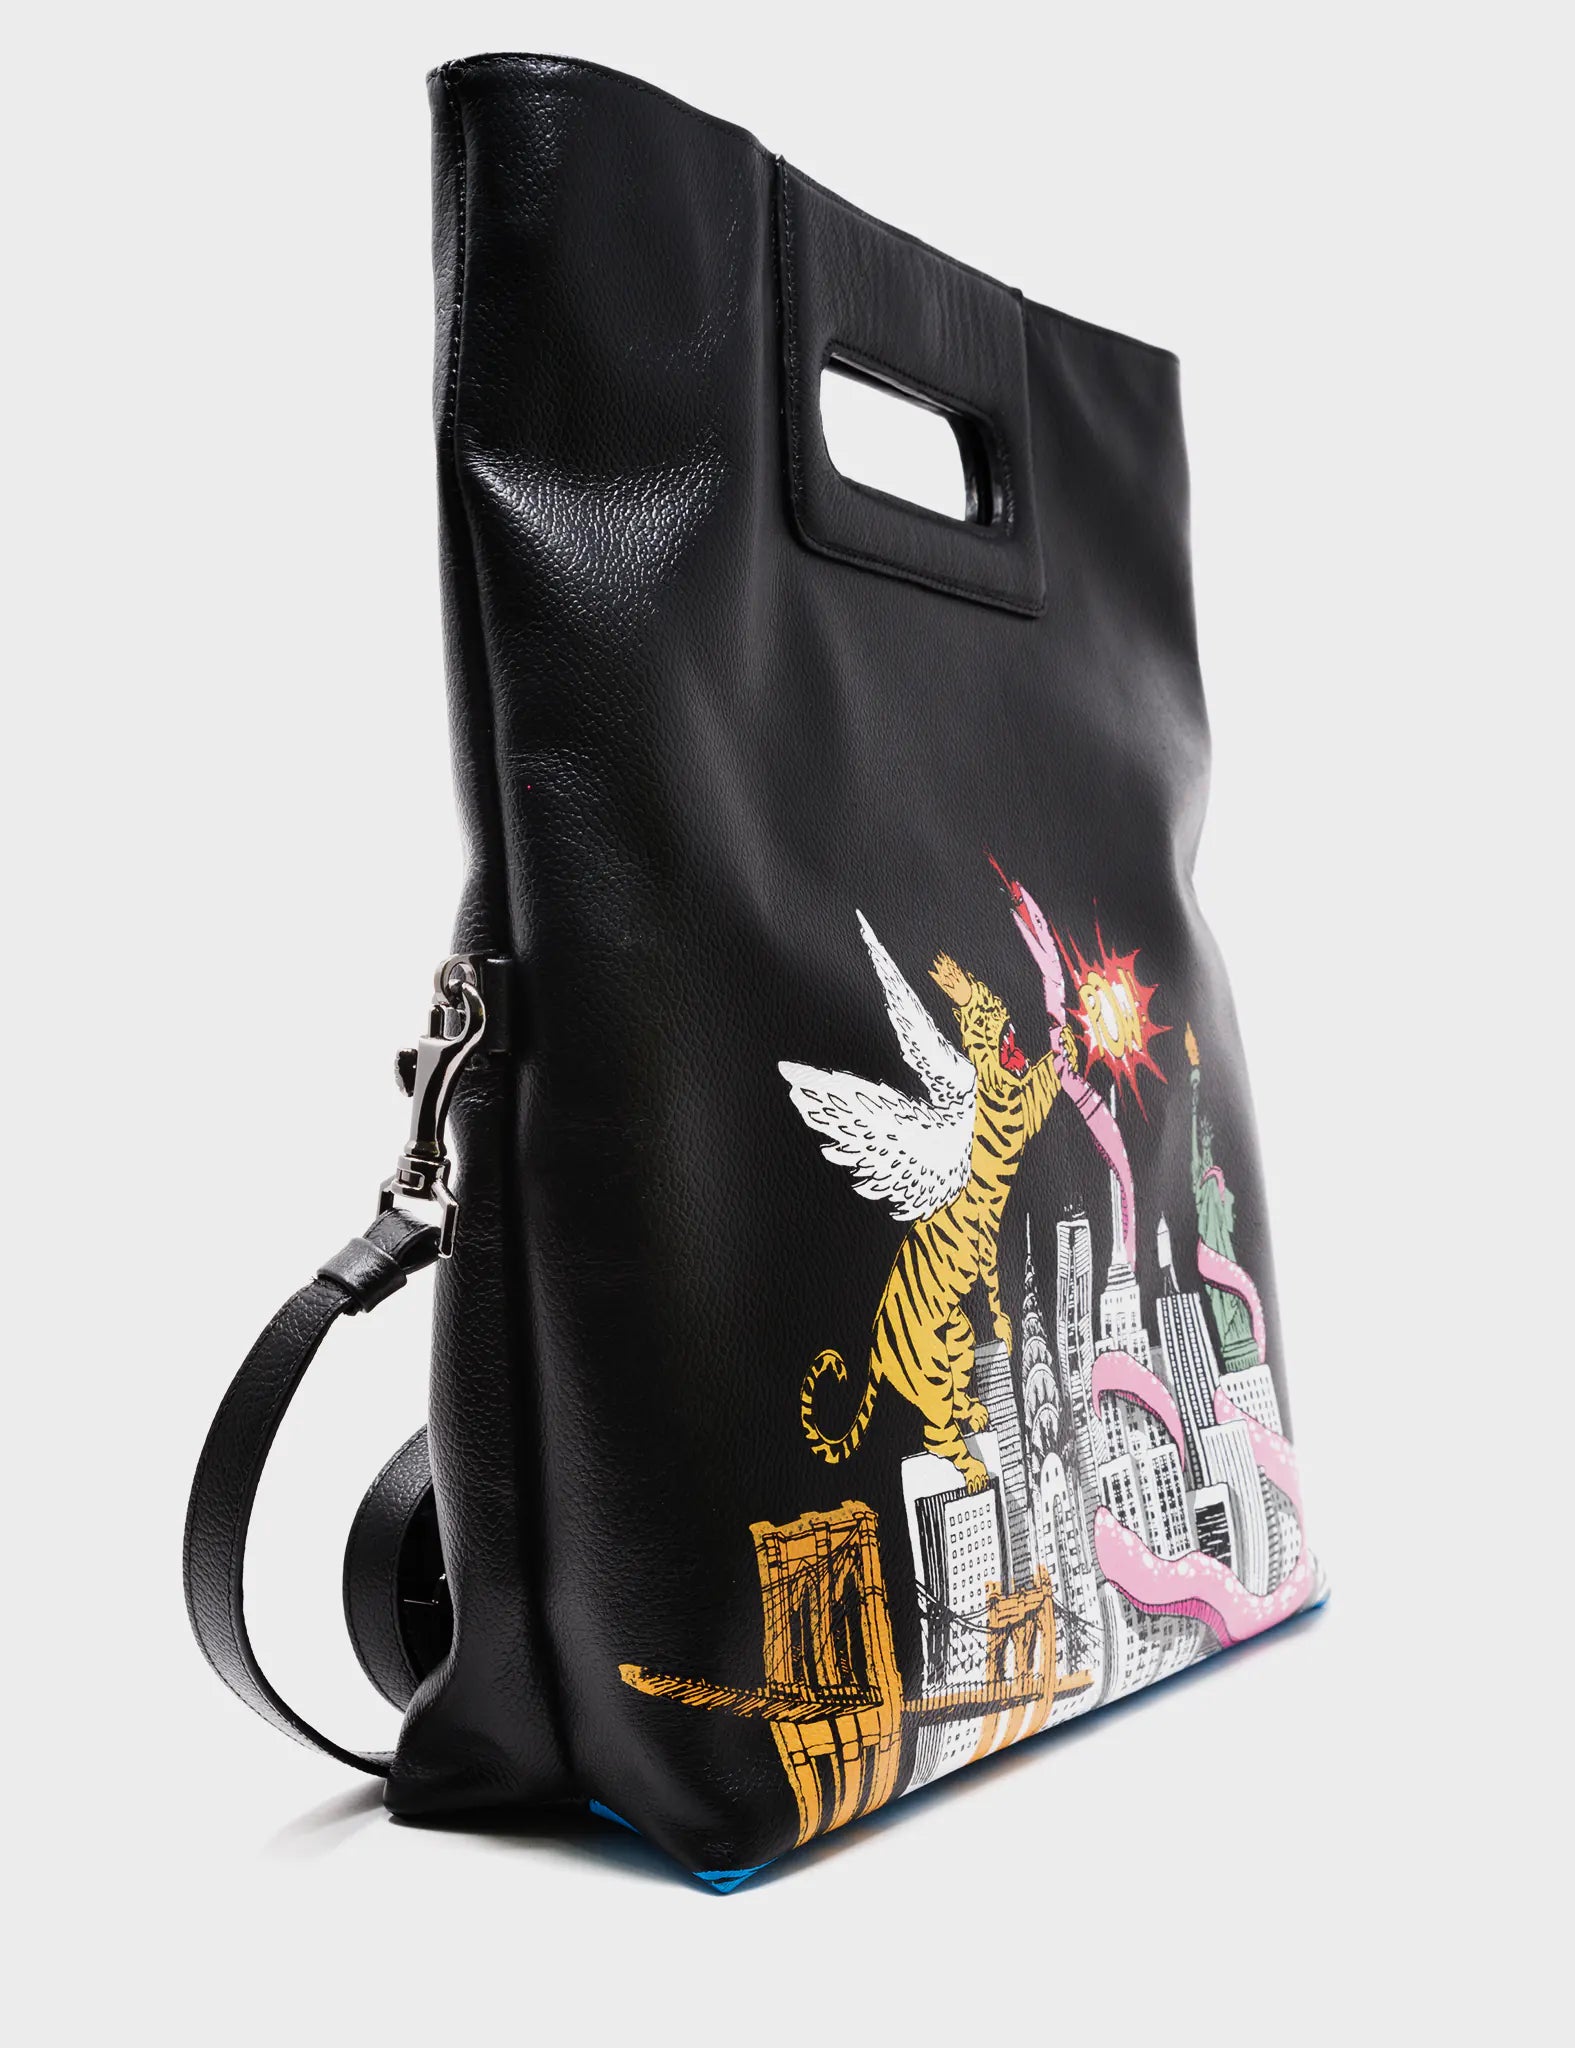 Convertible Crossbody Bag - Black Leather New york skyline tiger and snake Print - side